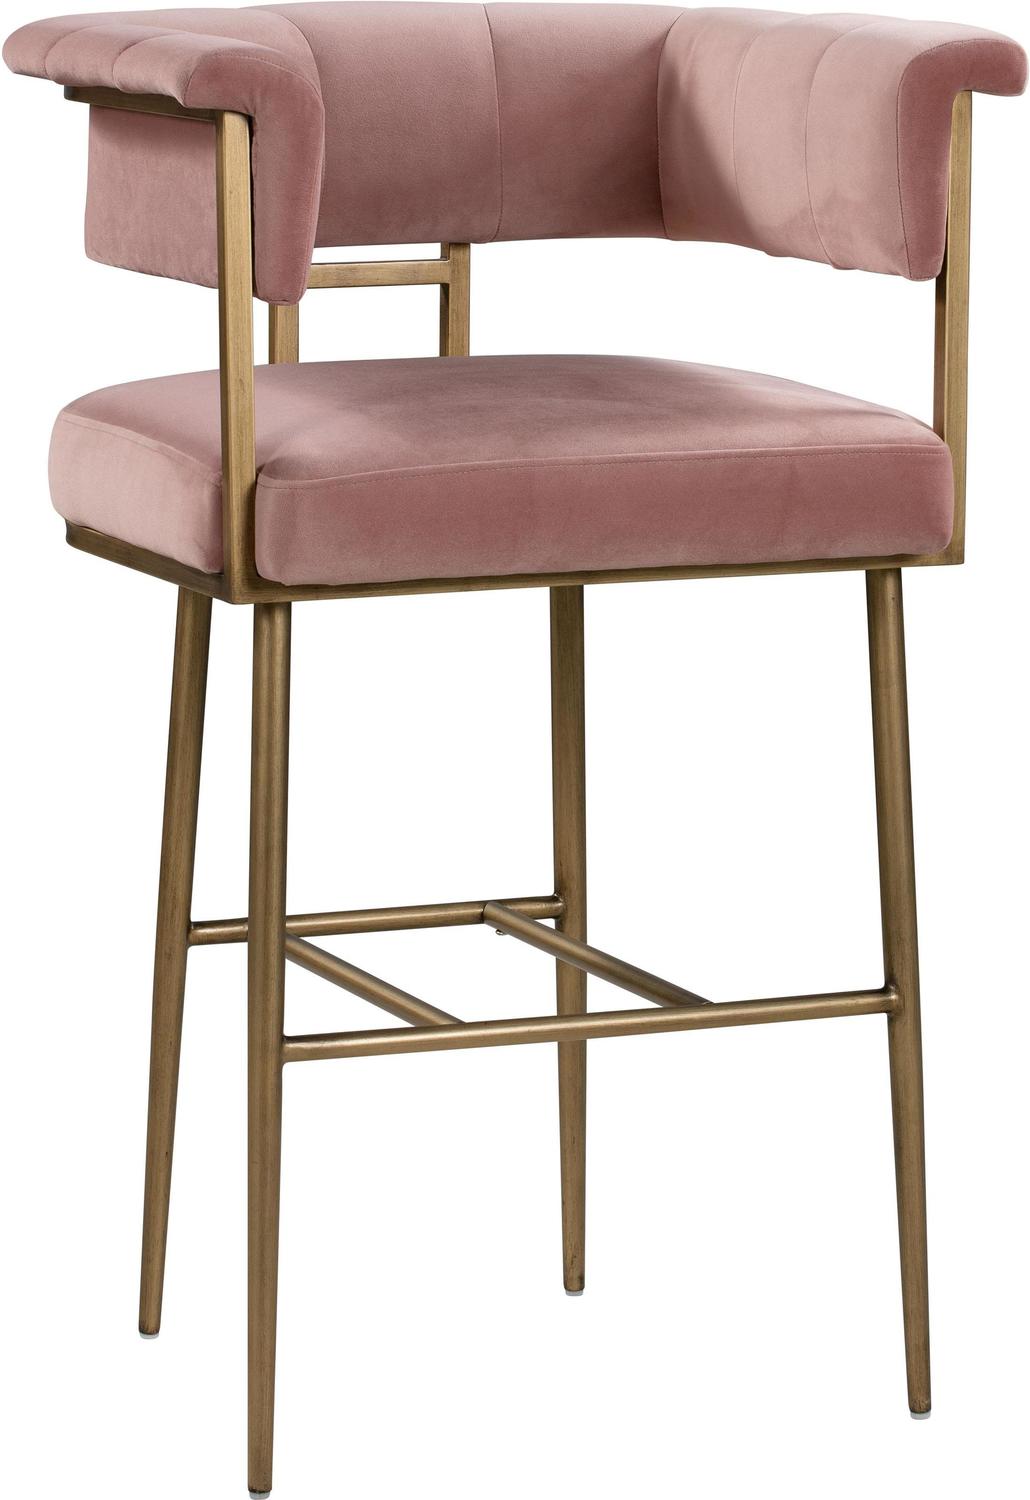 Tov Furniture Stools Bar Chairs and Stools Blush